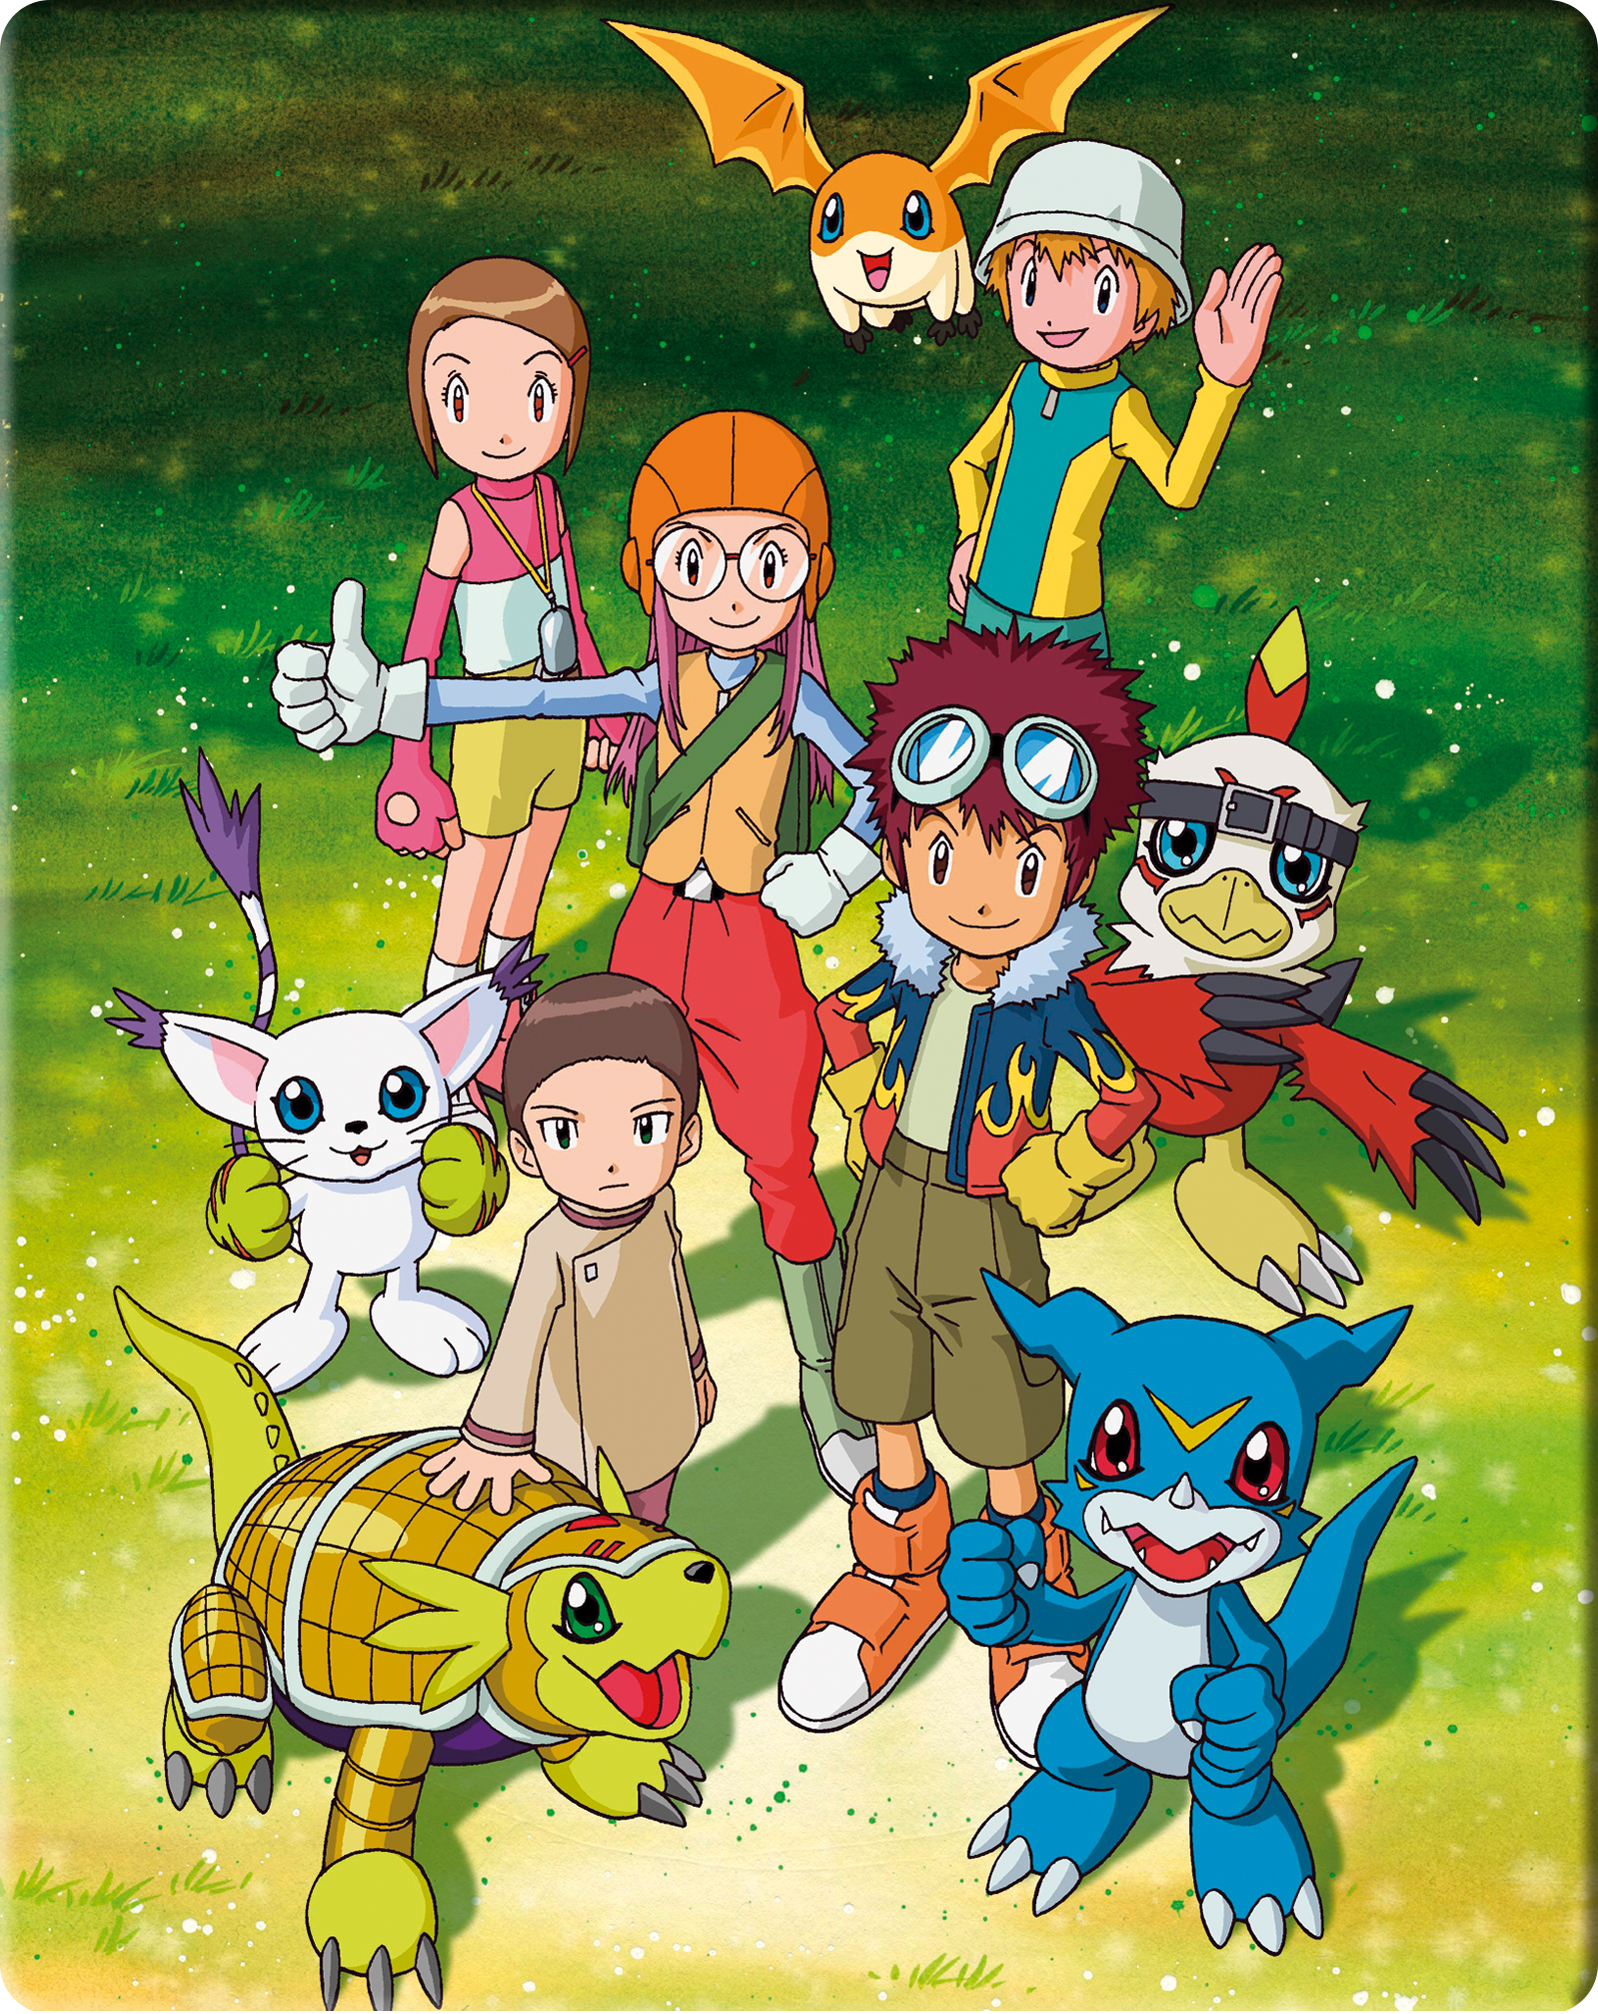 Digimon Adventure 02 - Volume 1 - Limited Edition: Episode 01-17 im FuturePak [Blu-ray] Image 2